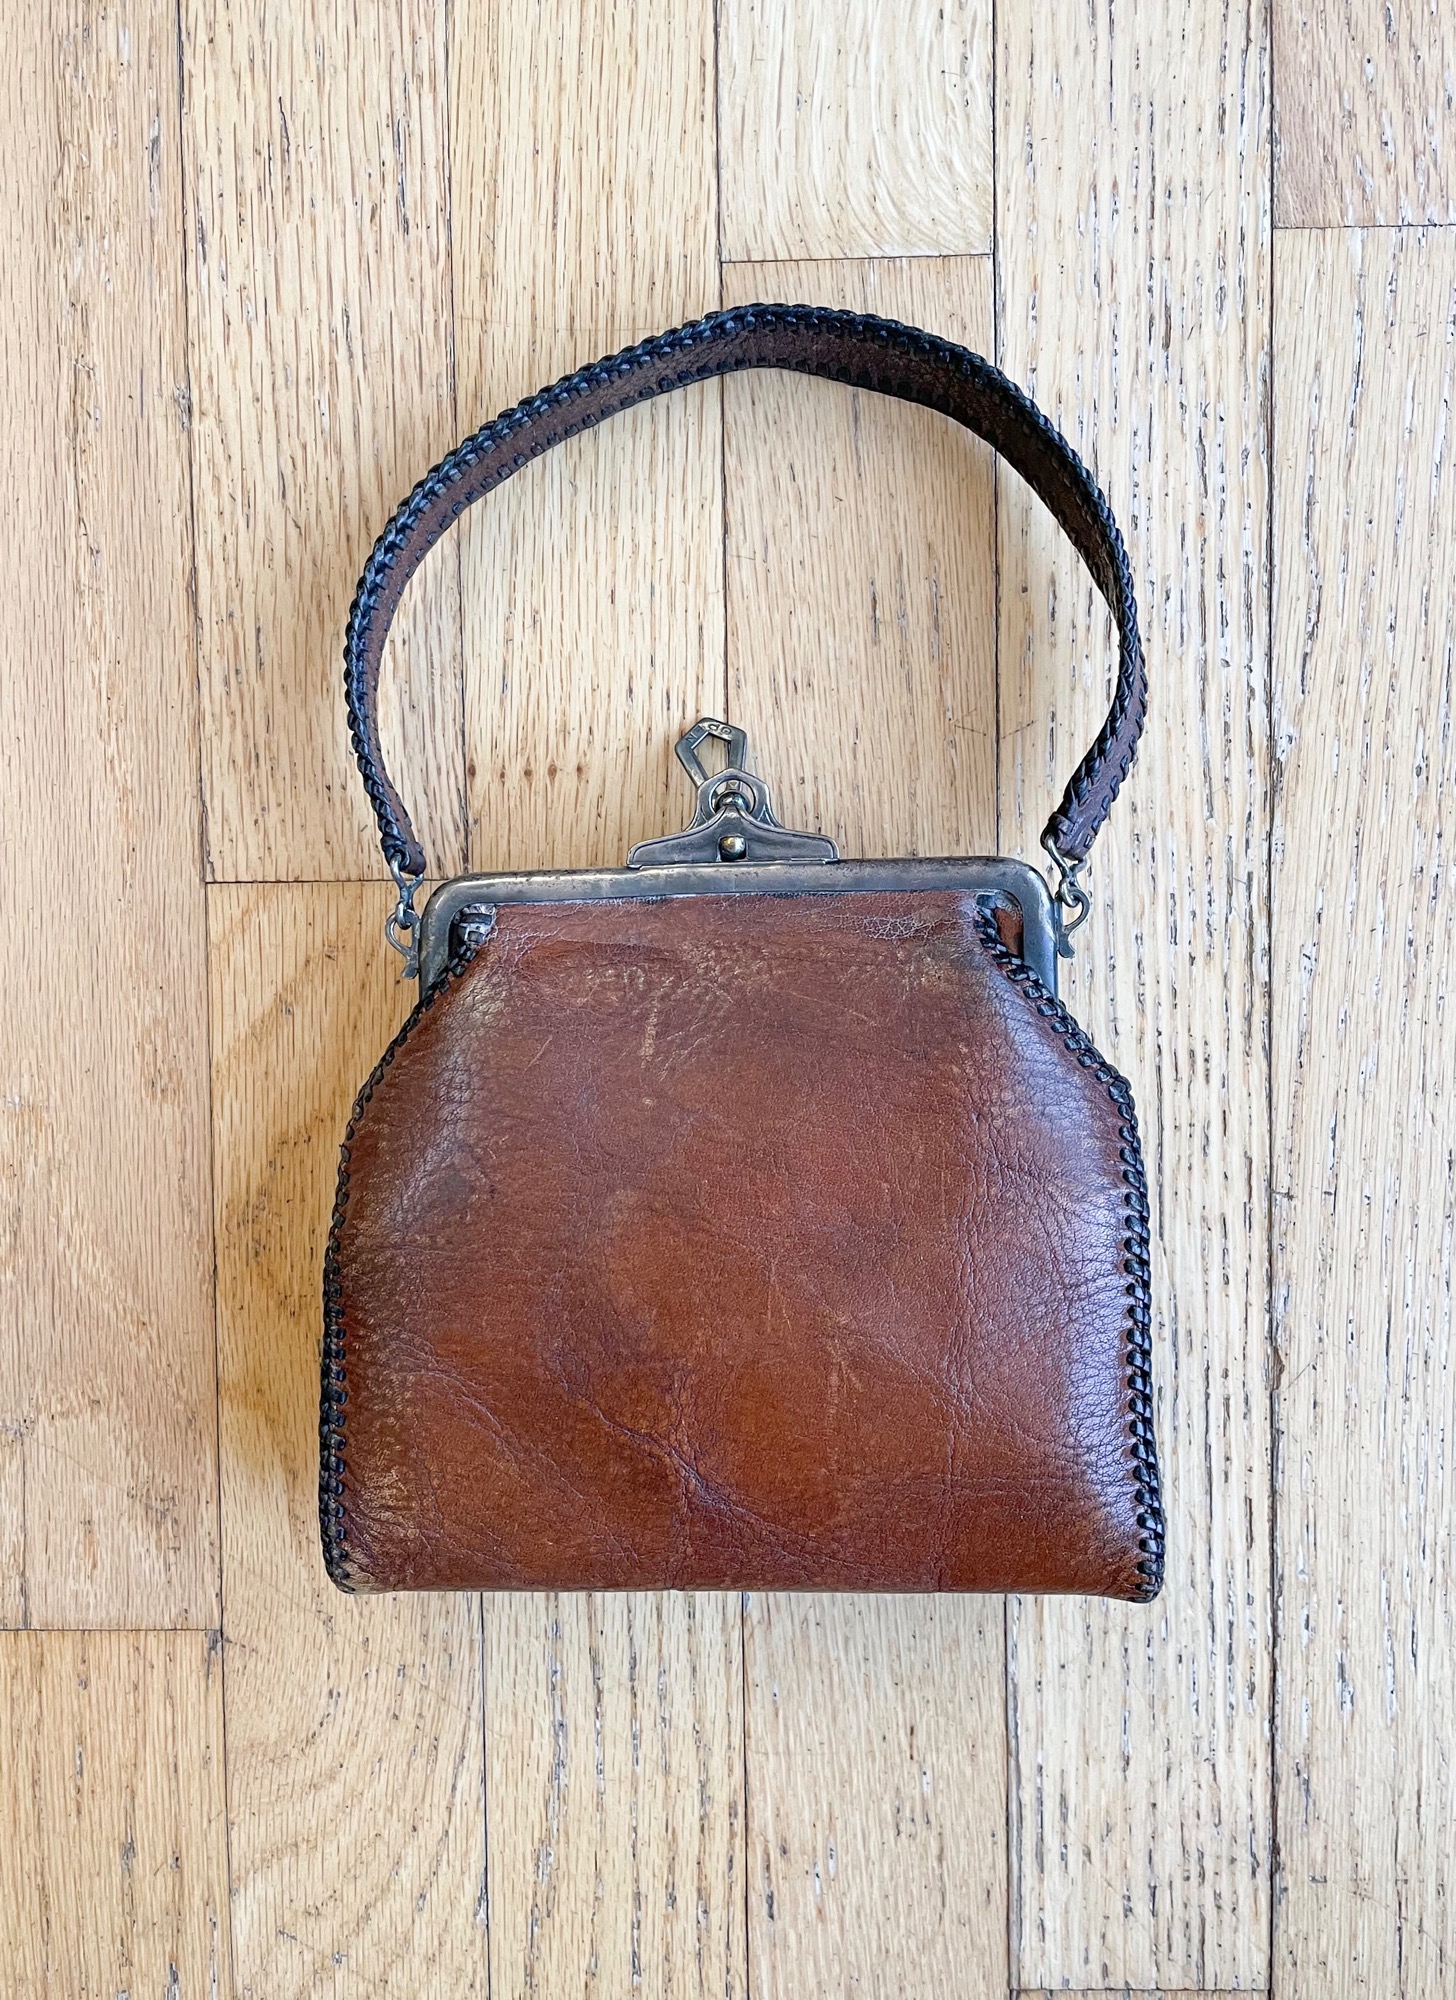 Vintage Handbags for Women - Leather Shop Factory